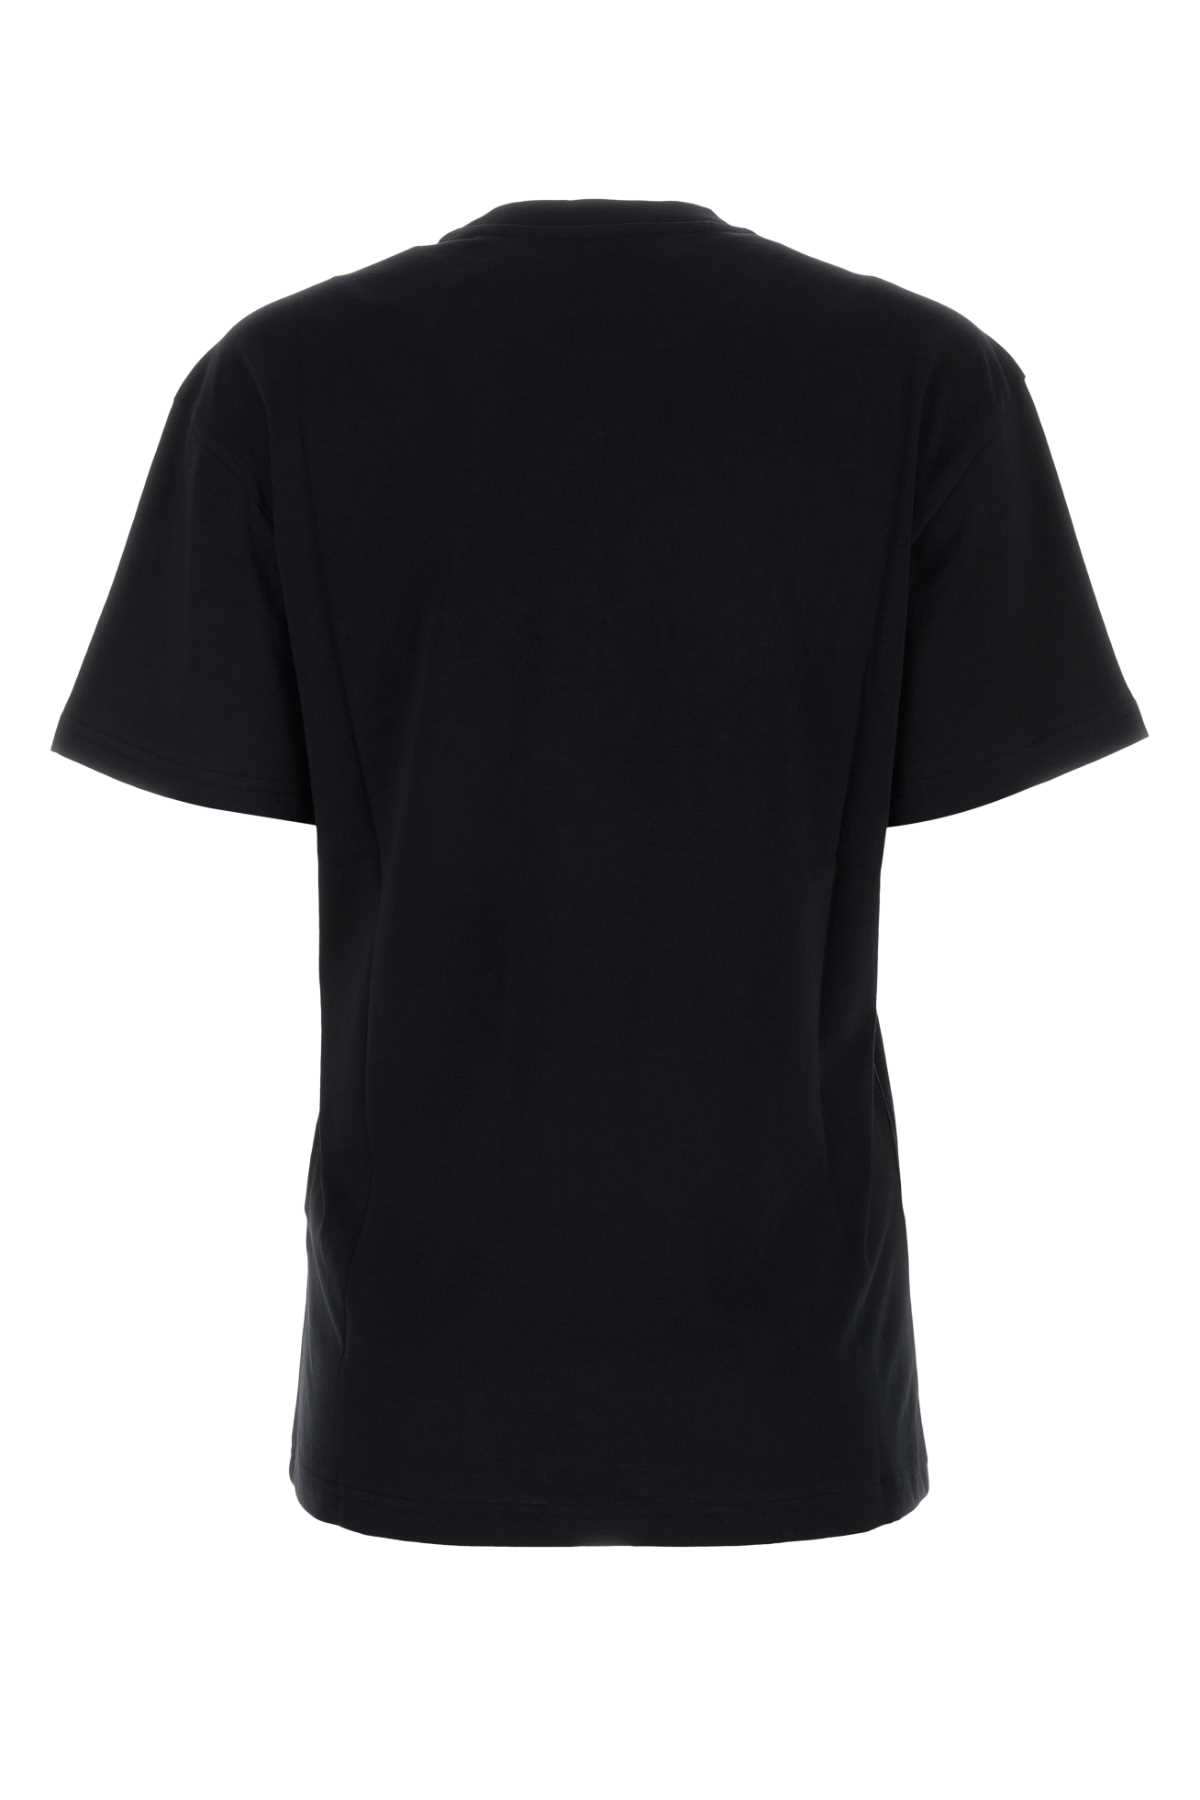 Jw Anderson Black Cotton T-shirt